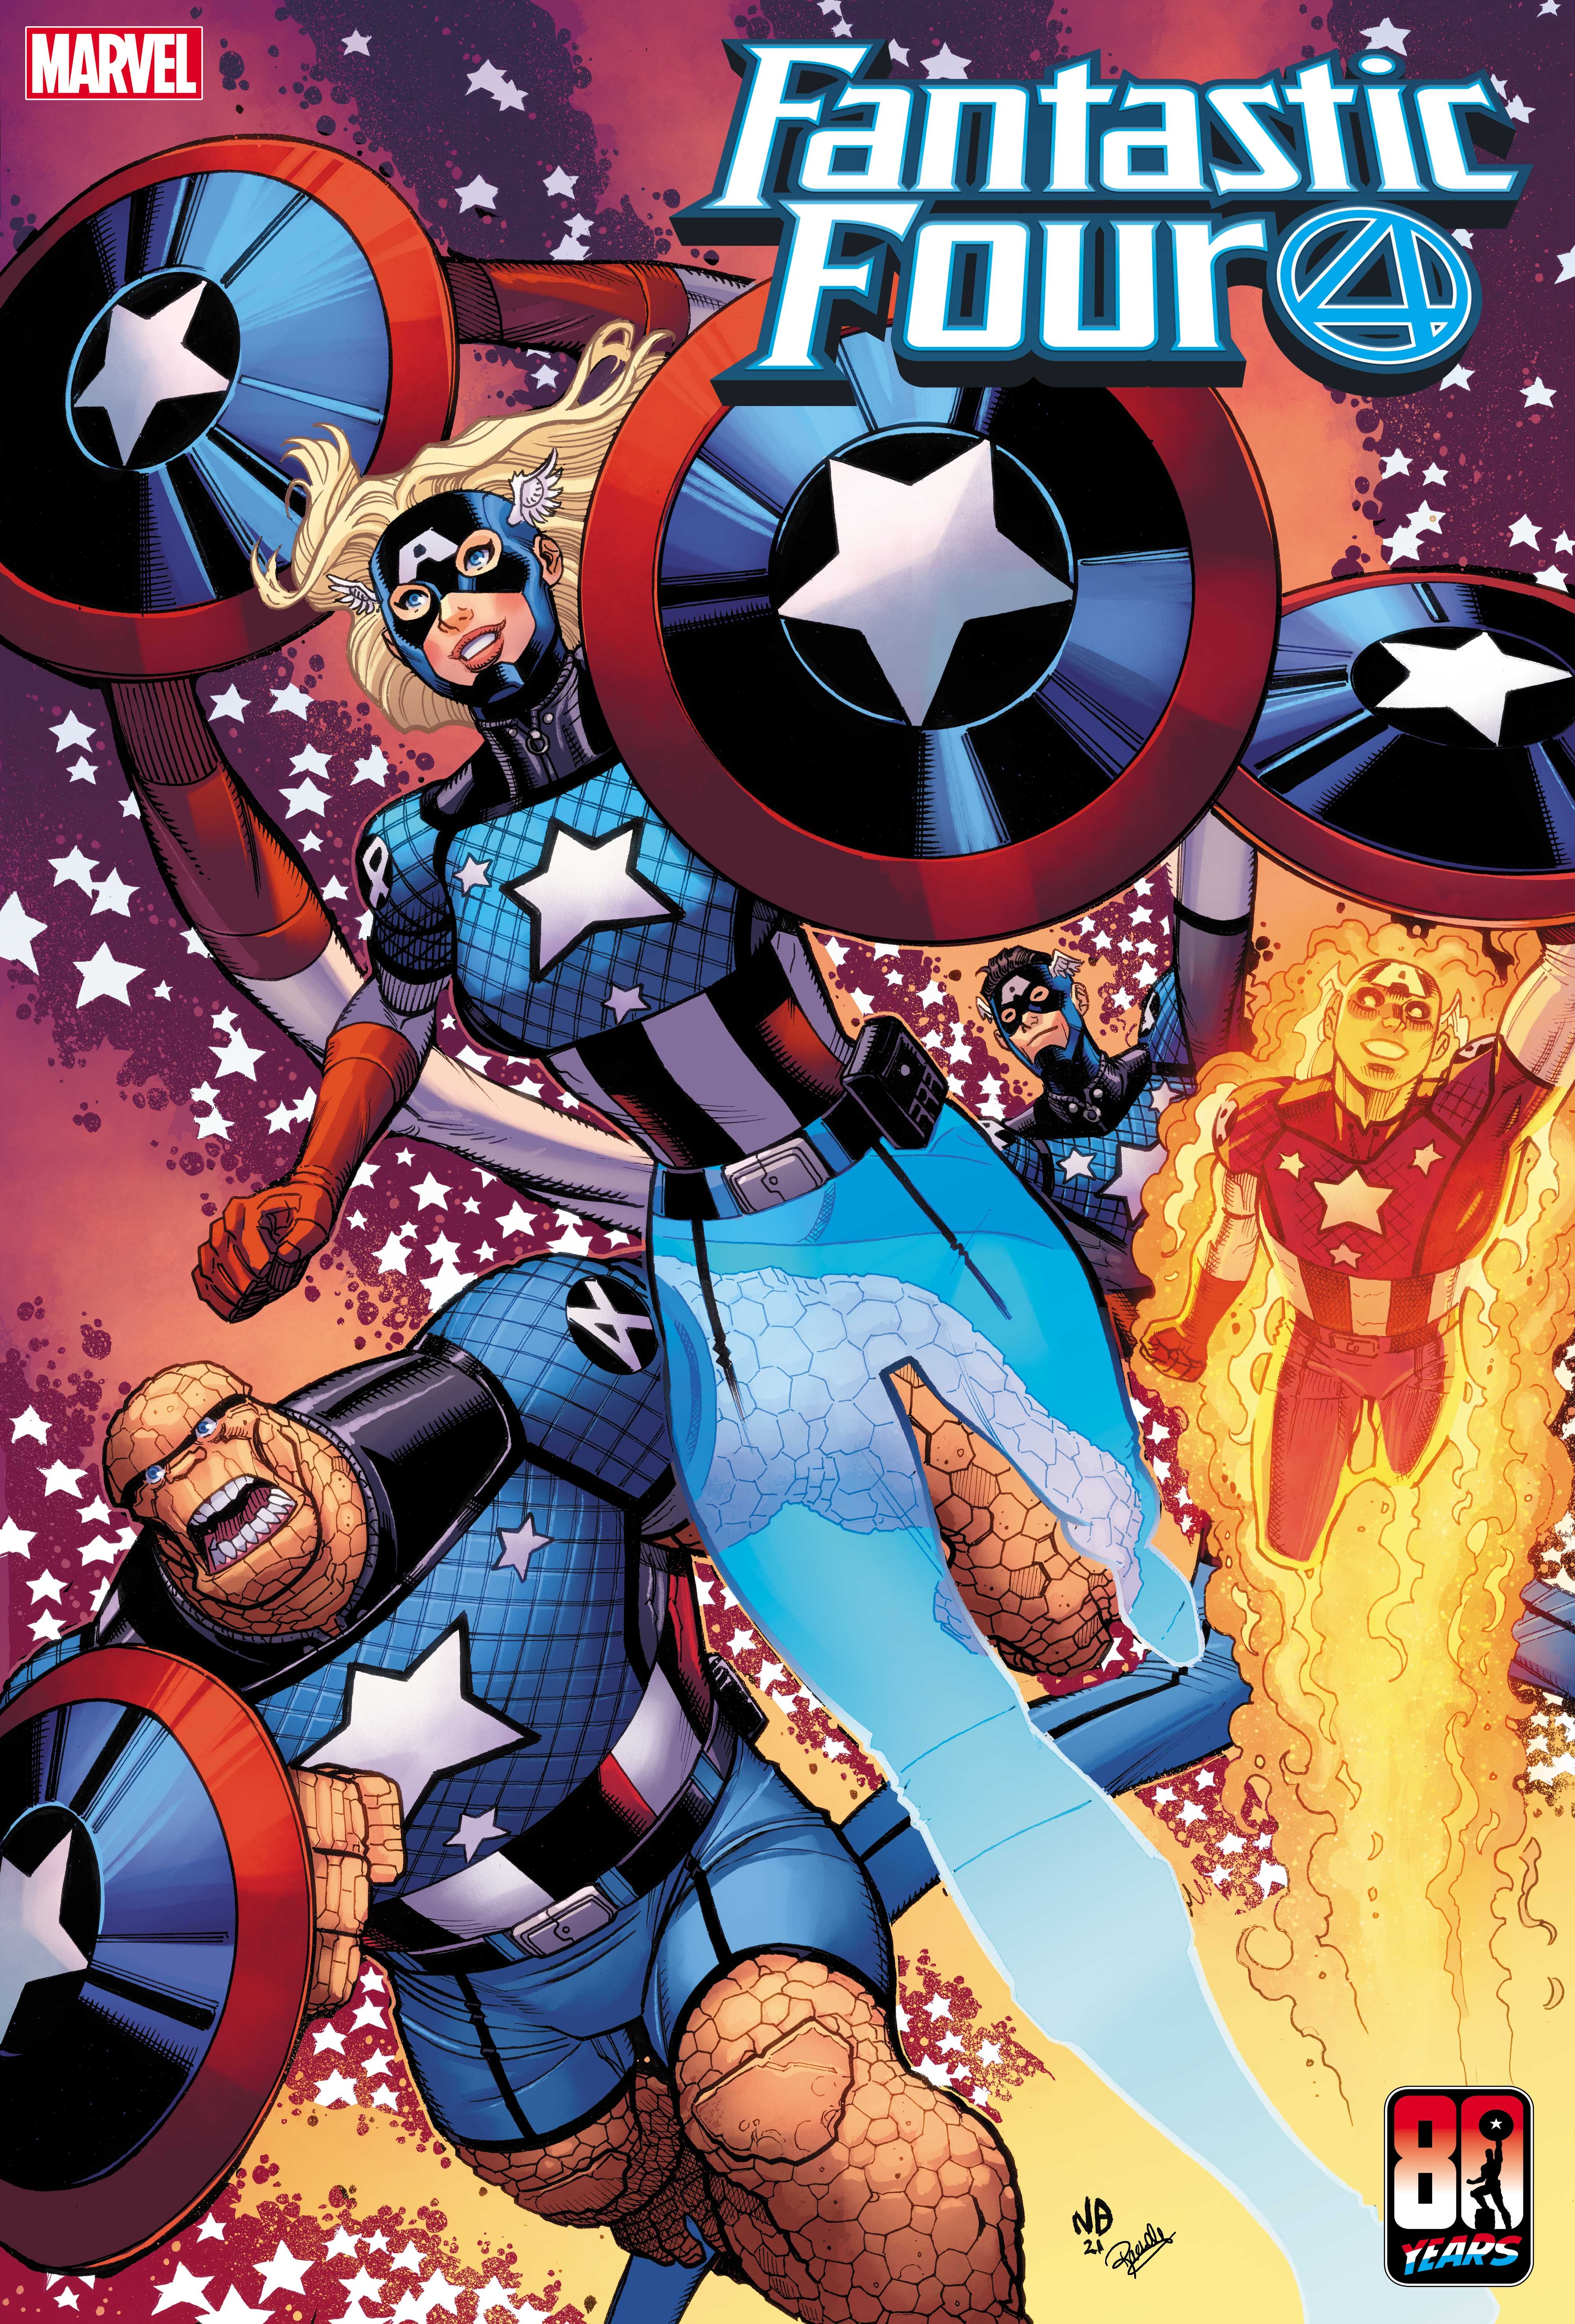 Captain America's 80th anniversary, Marvel Comics released a 